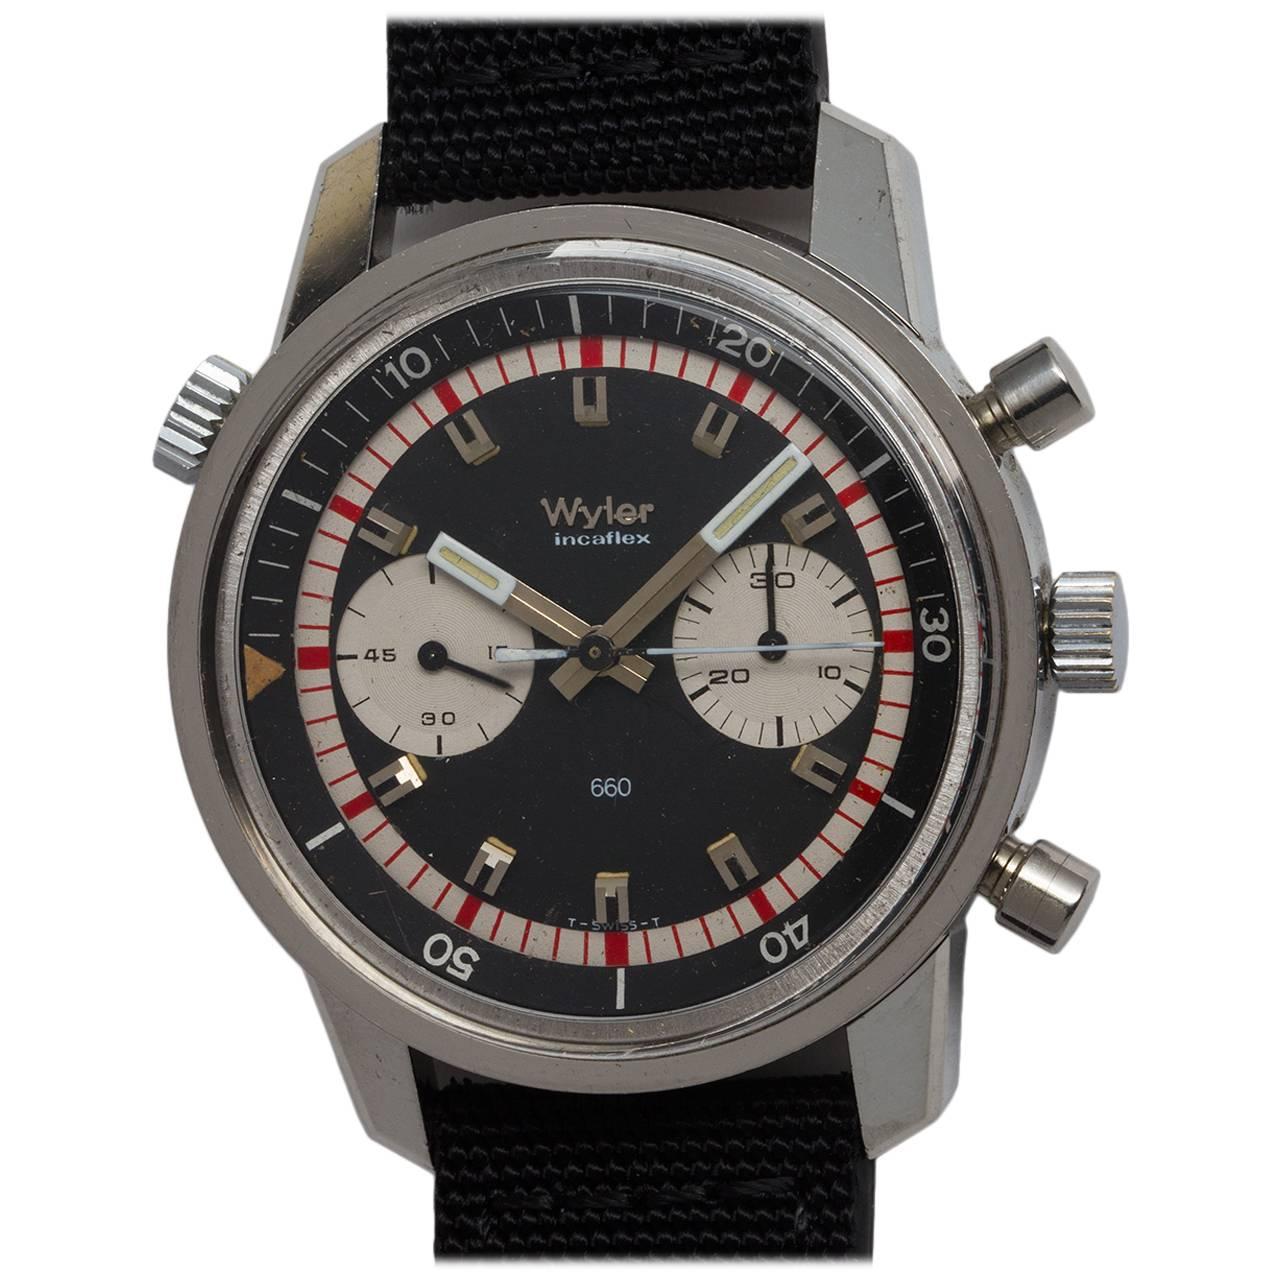 Wyler Stainless Steel Incaflex Chronograph Wristwatch 